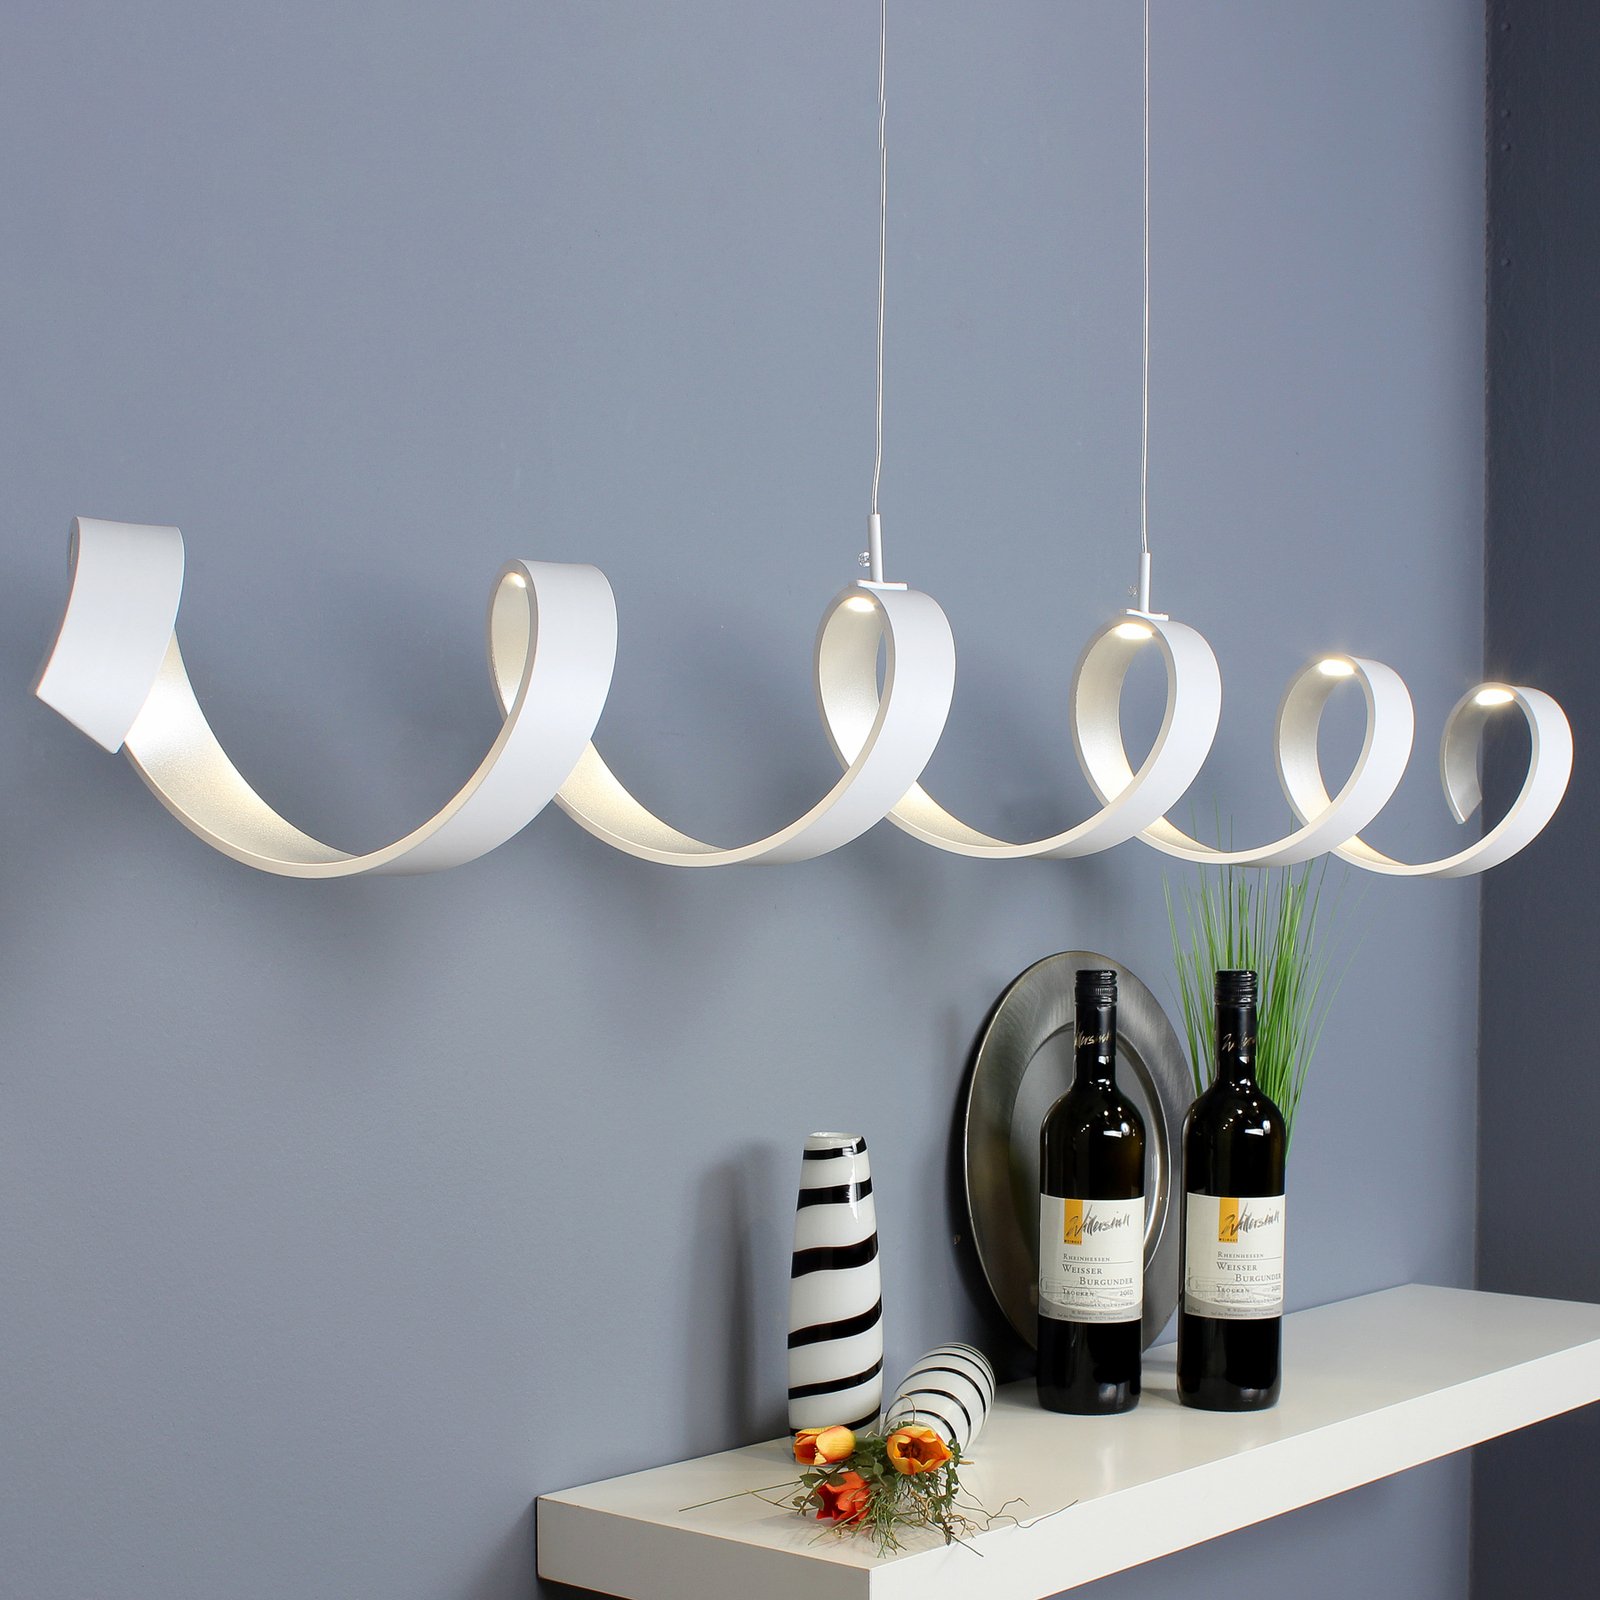 Helix LED hanging light white/silver length 125 cm